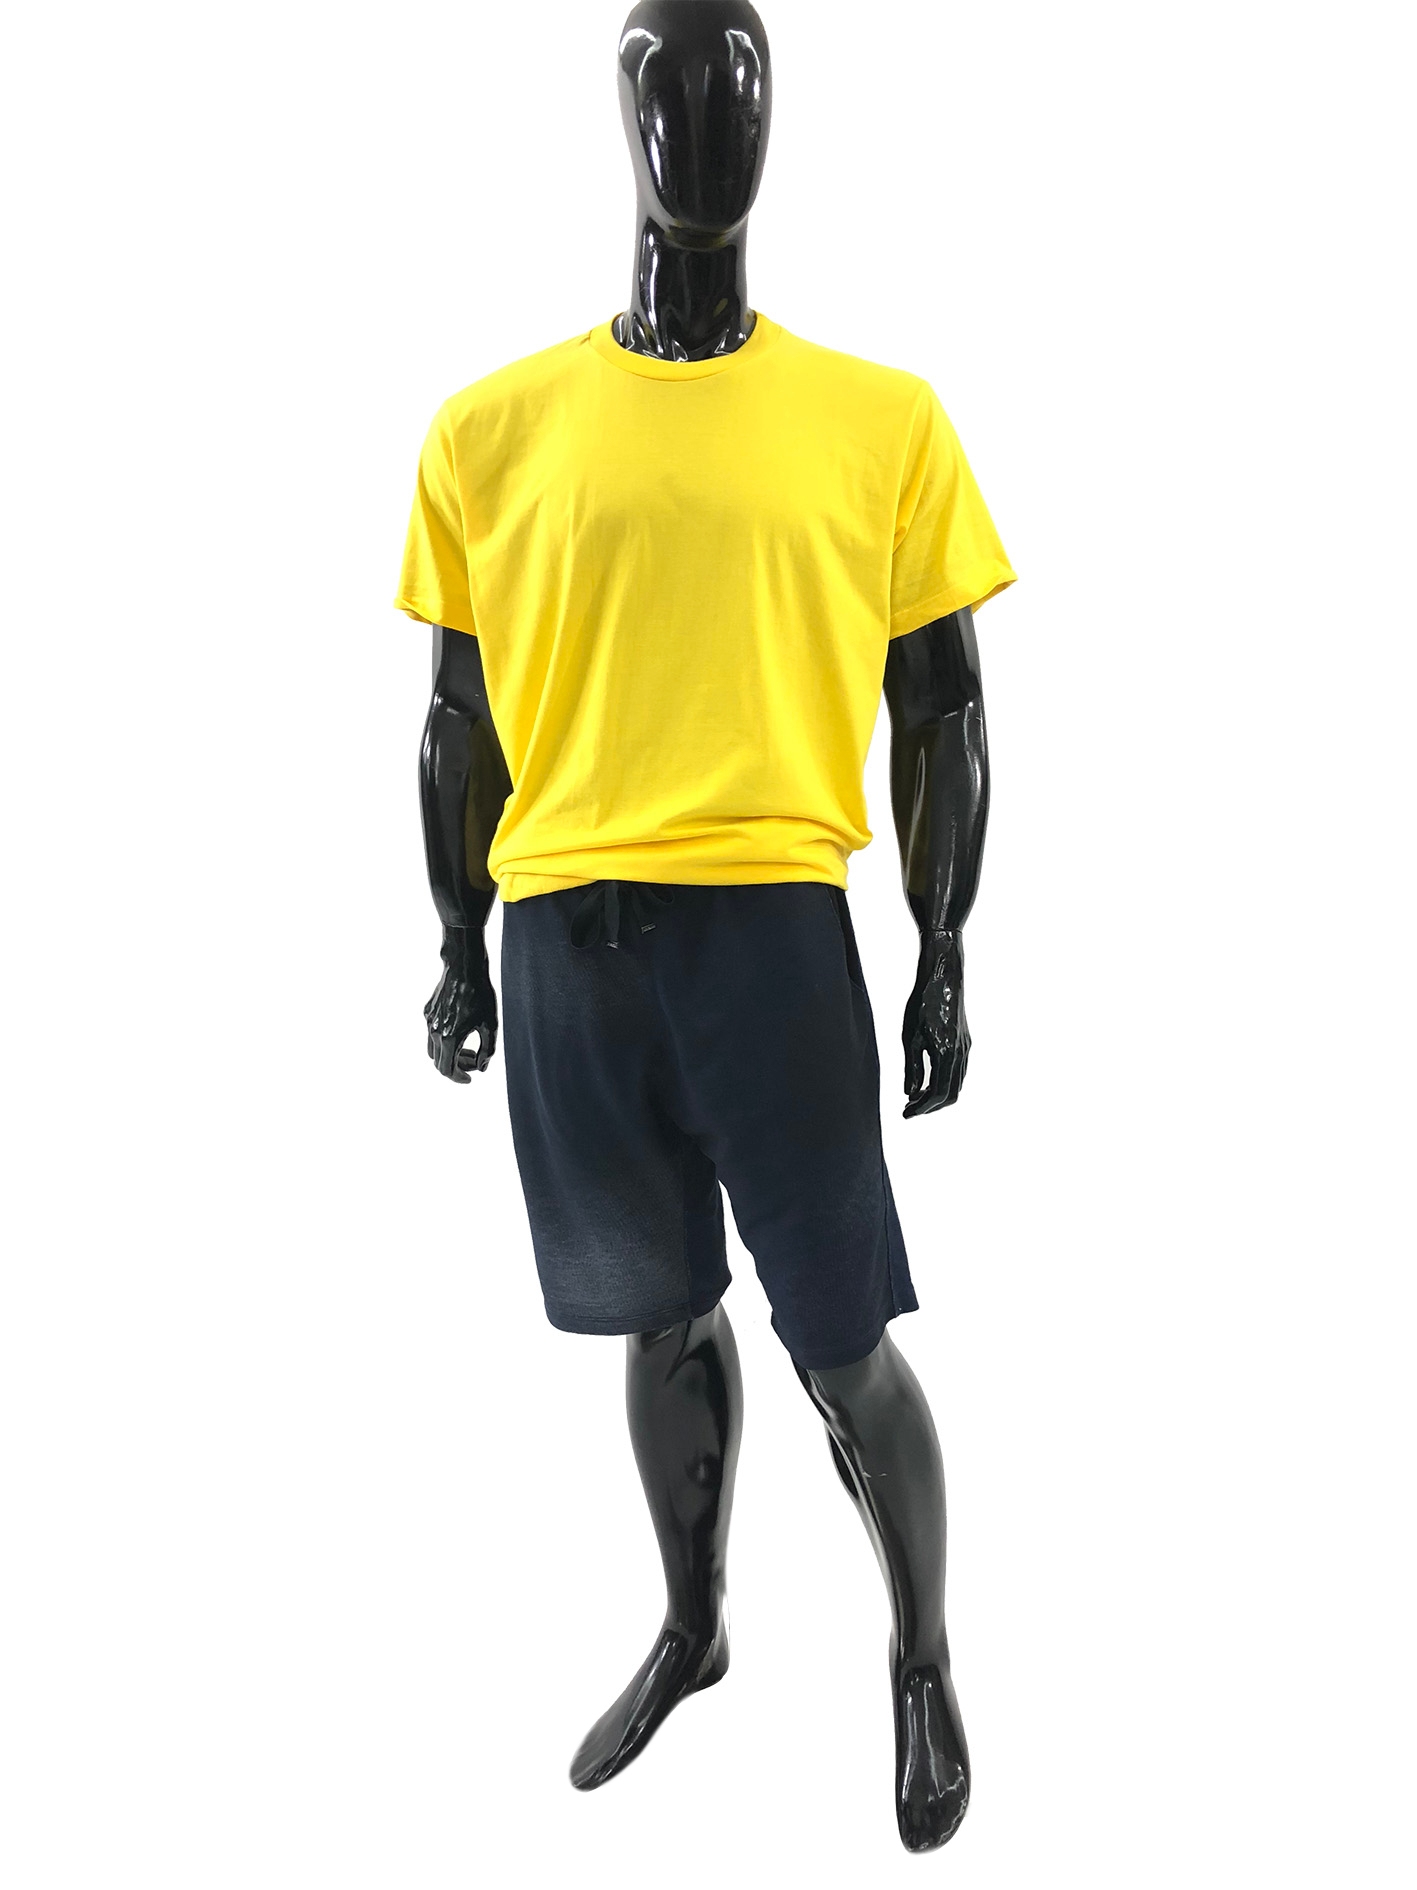 Camiseta Plus Size Basica 100 % Algodão Ref 00660